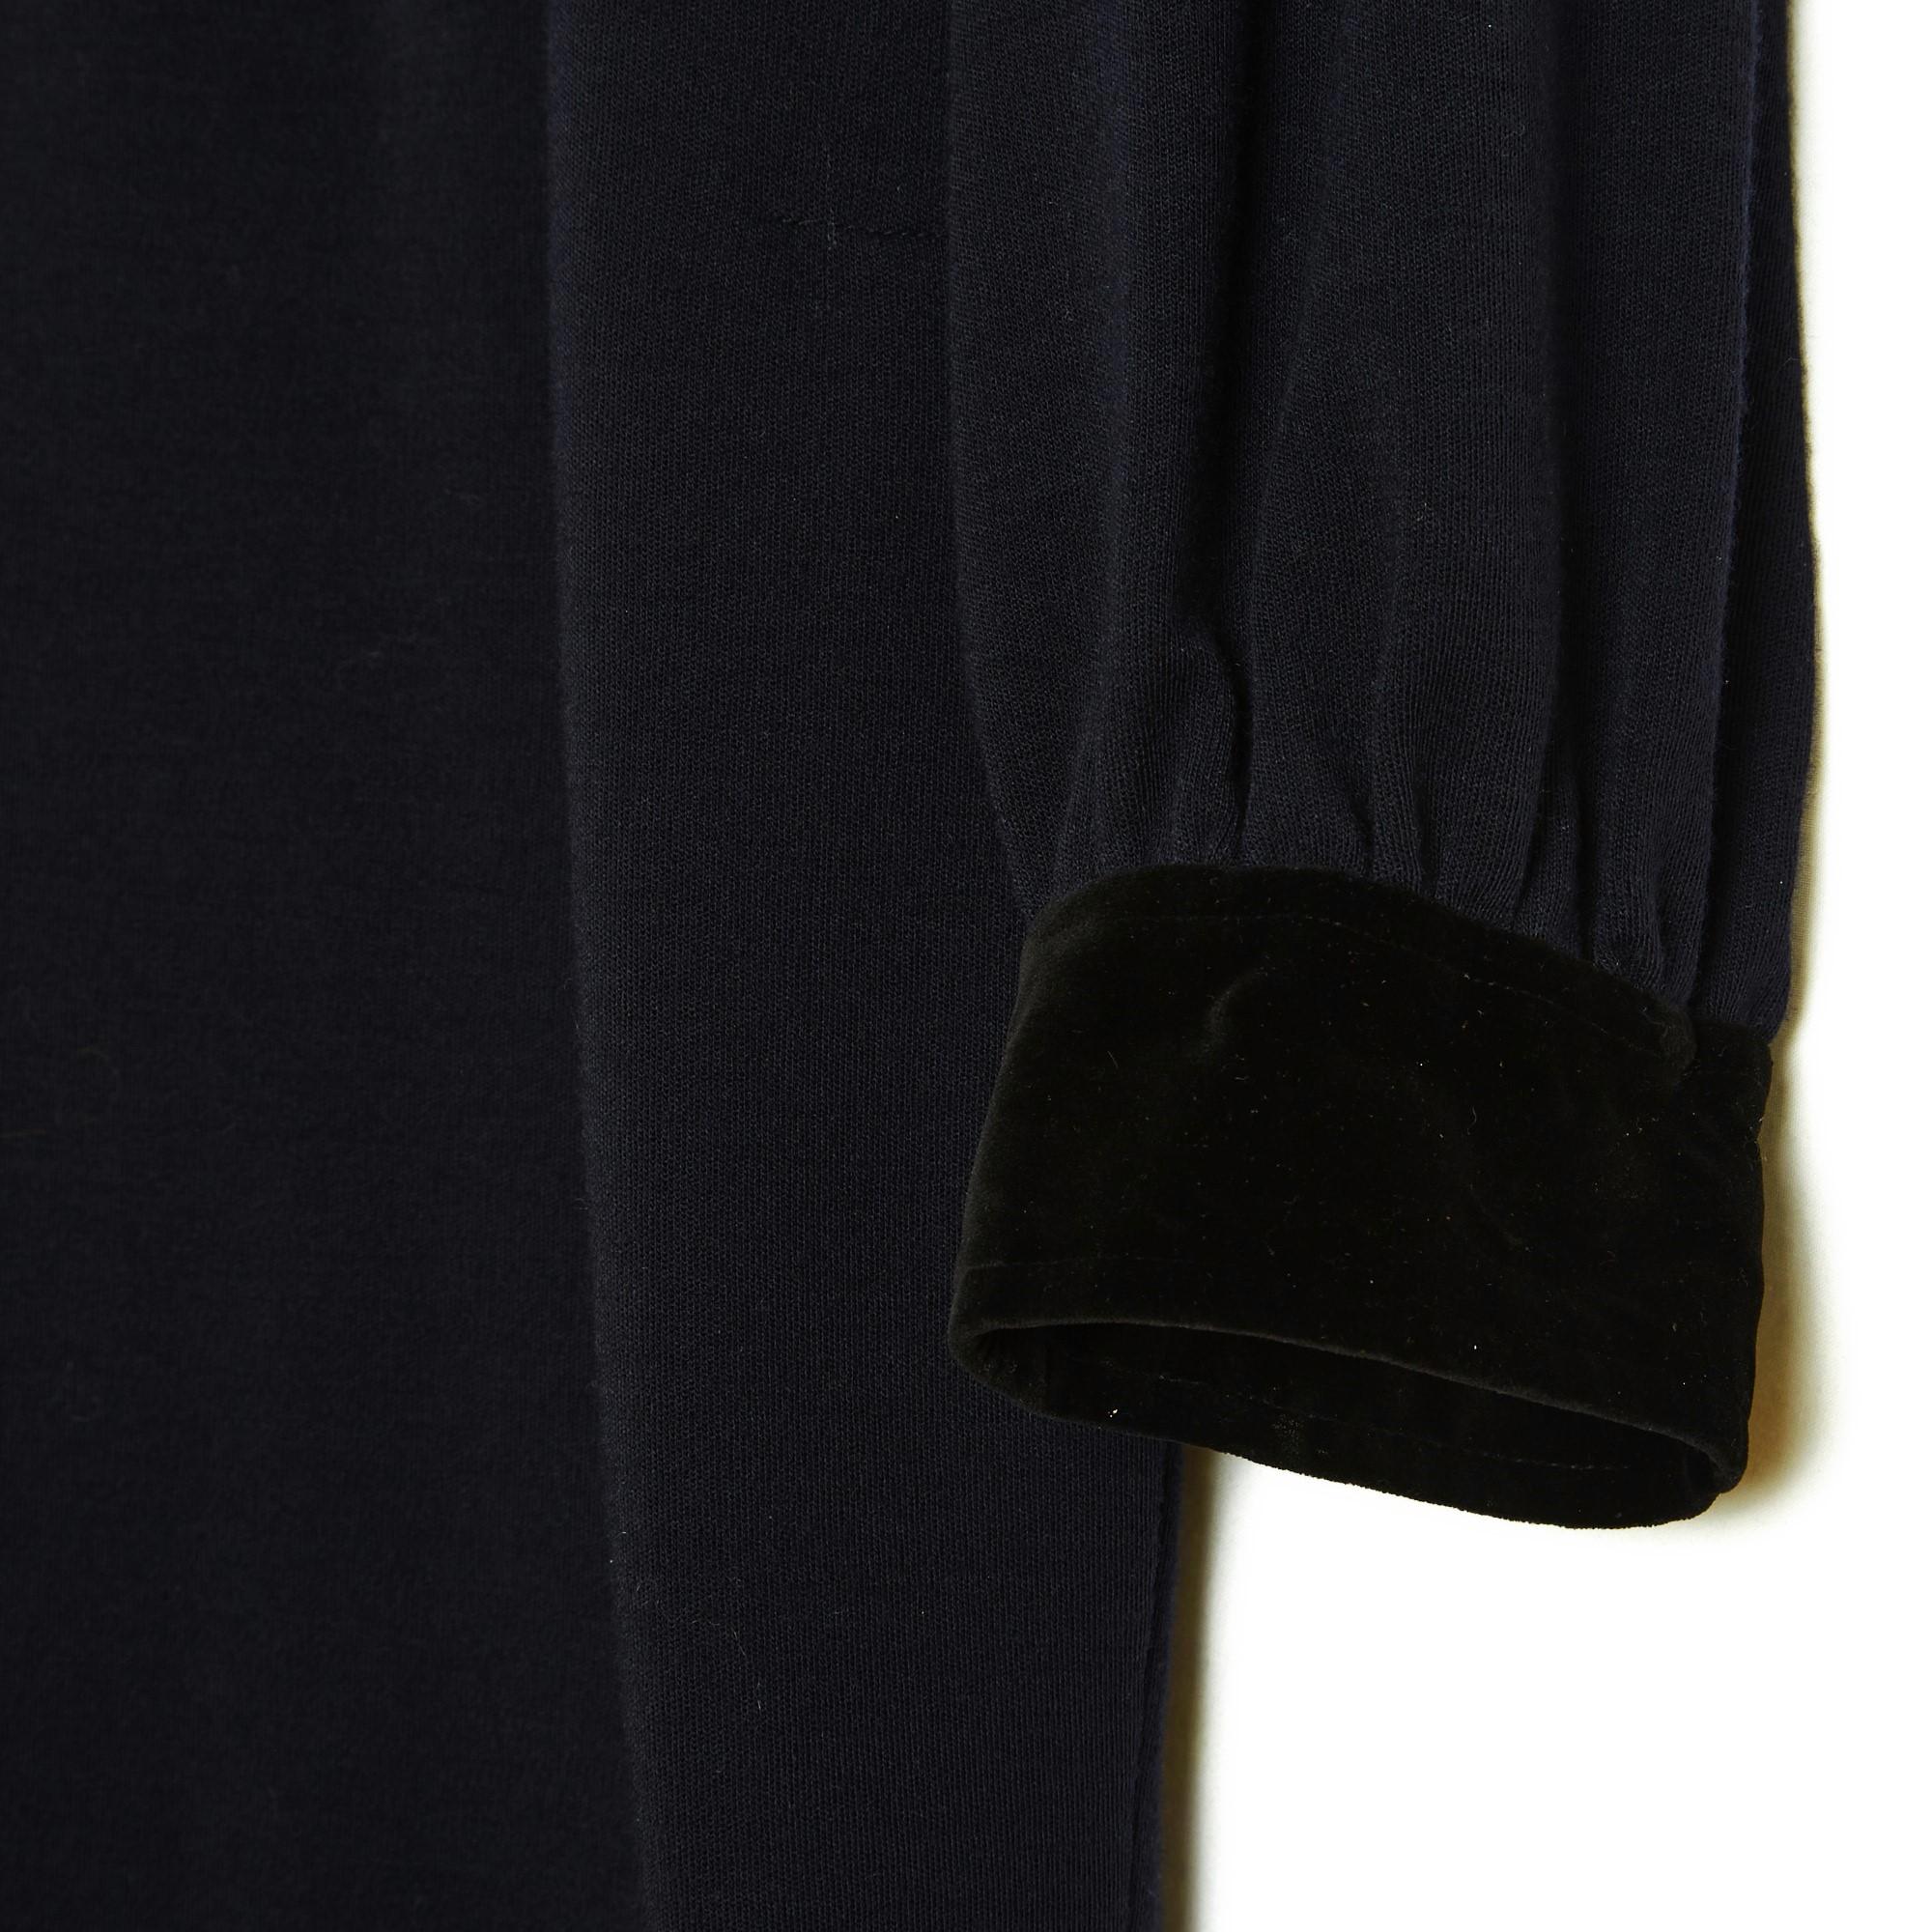 Yves Saint Laurent Rive Gauche Little black dress FR36 For Sale 1